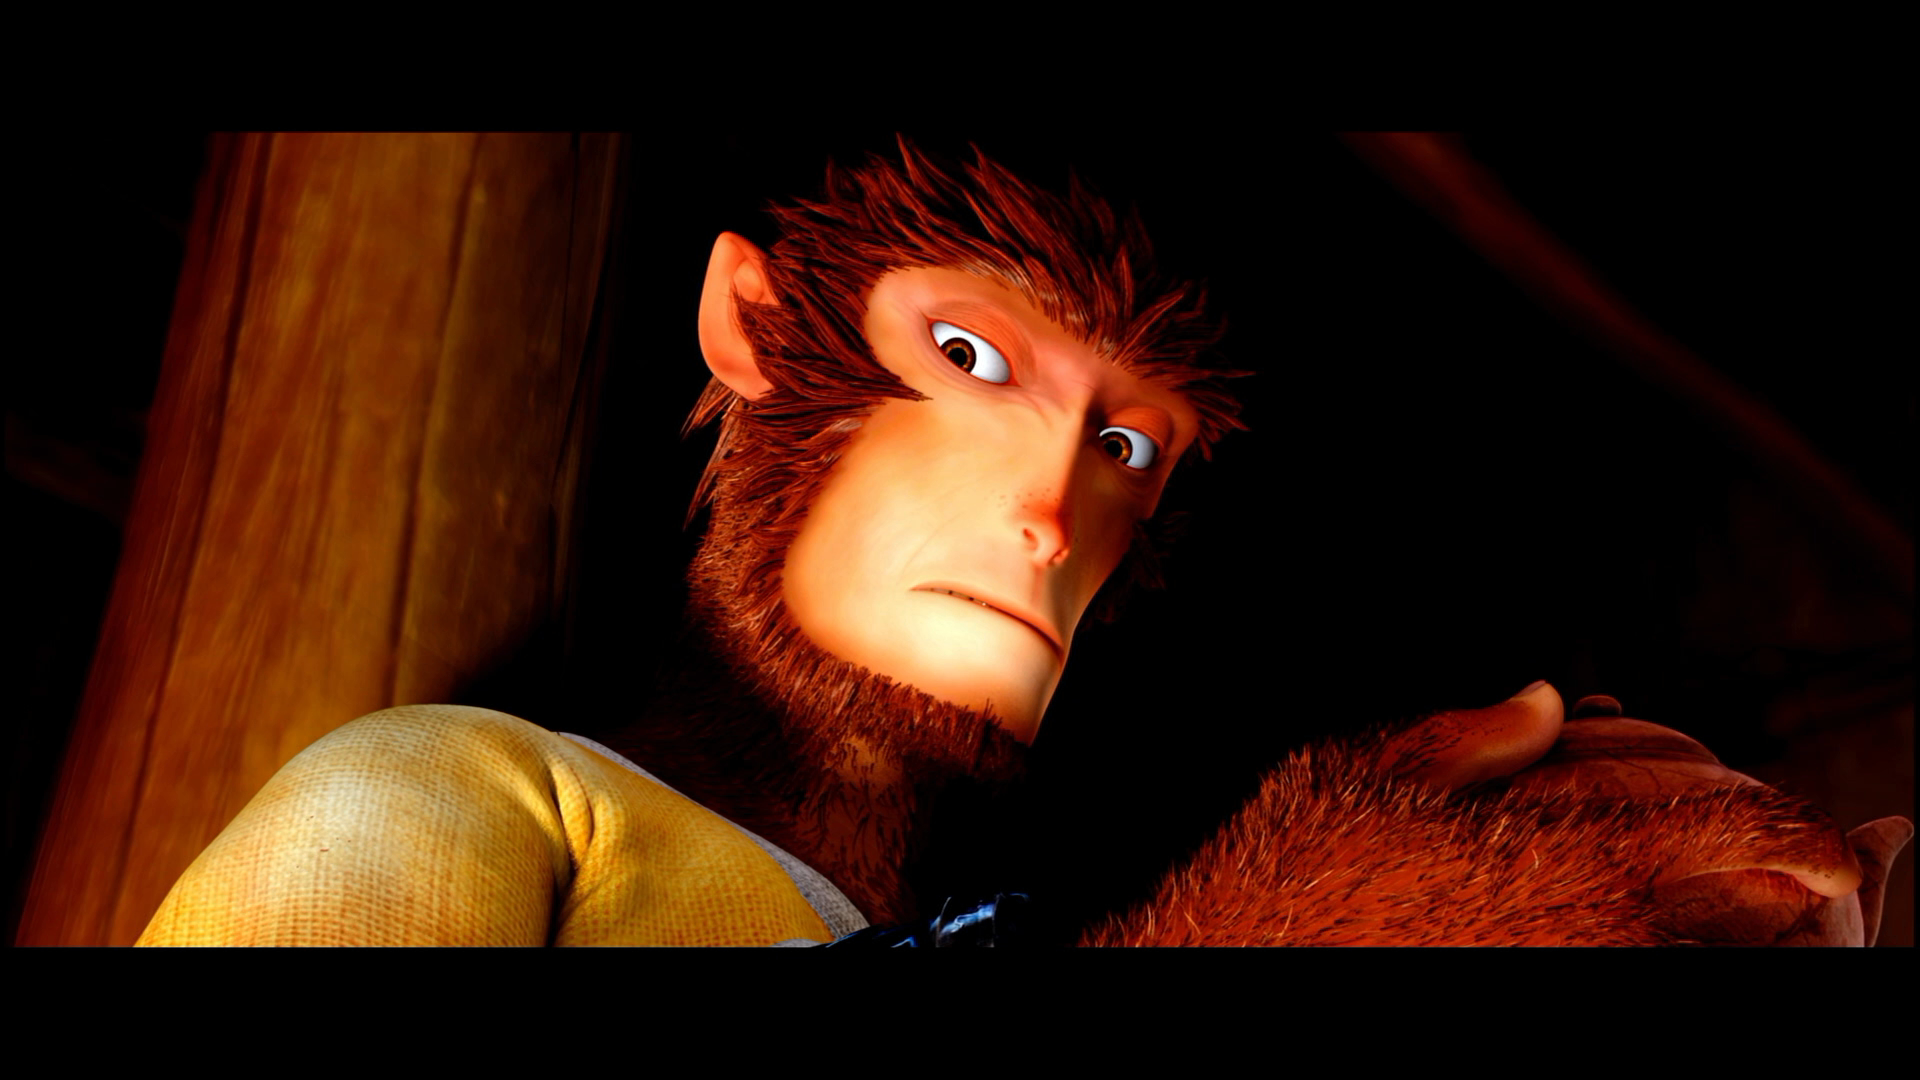 [西游记之大圣归来].Monkey.King.Hero.Is.Back.2015.JPN.BluRay.1080p.AVC.DTS-HD.MA.5.1-lingfriendly@OurBits   22.85G-11.png